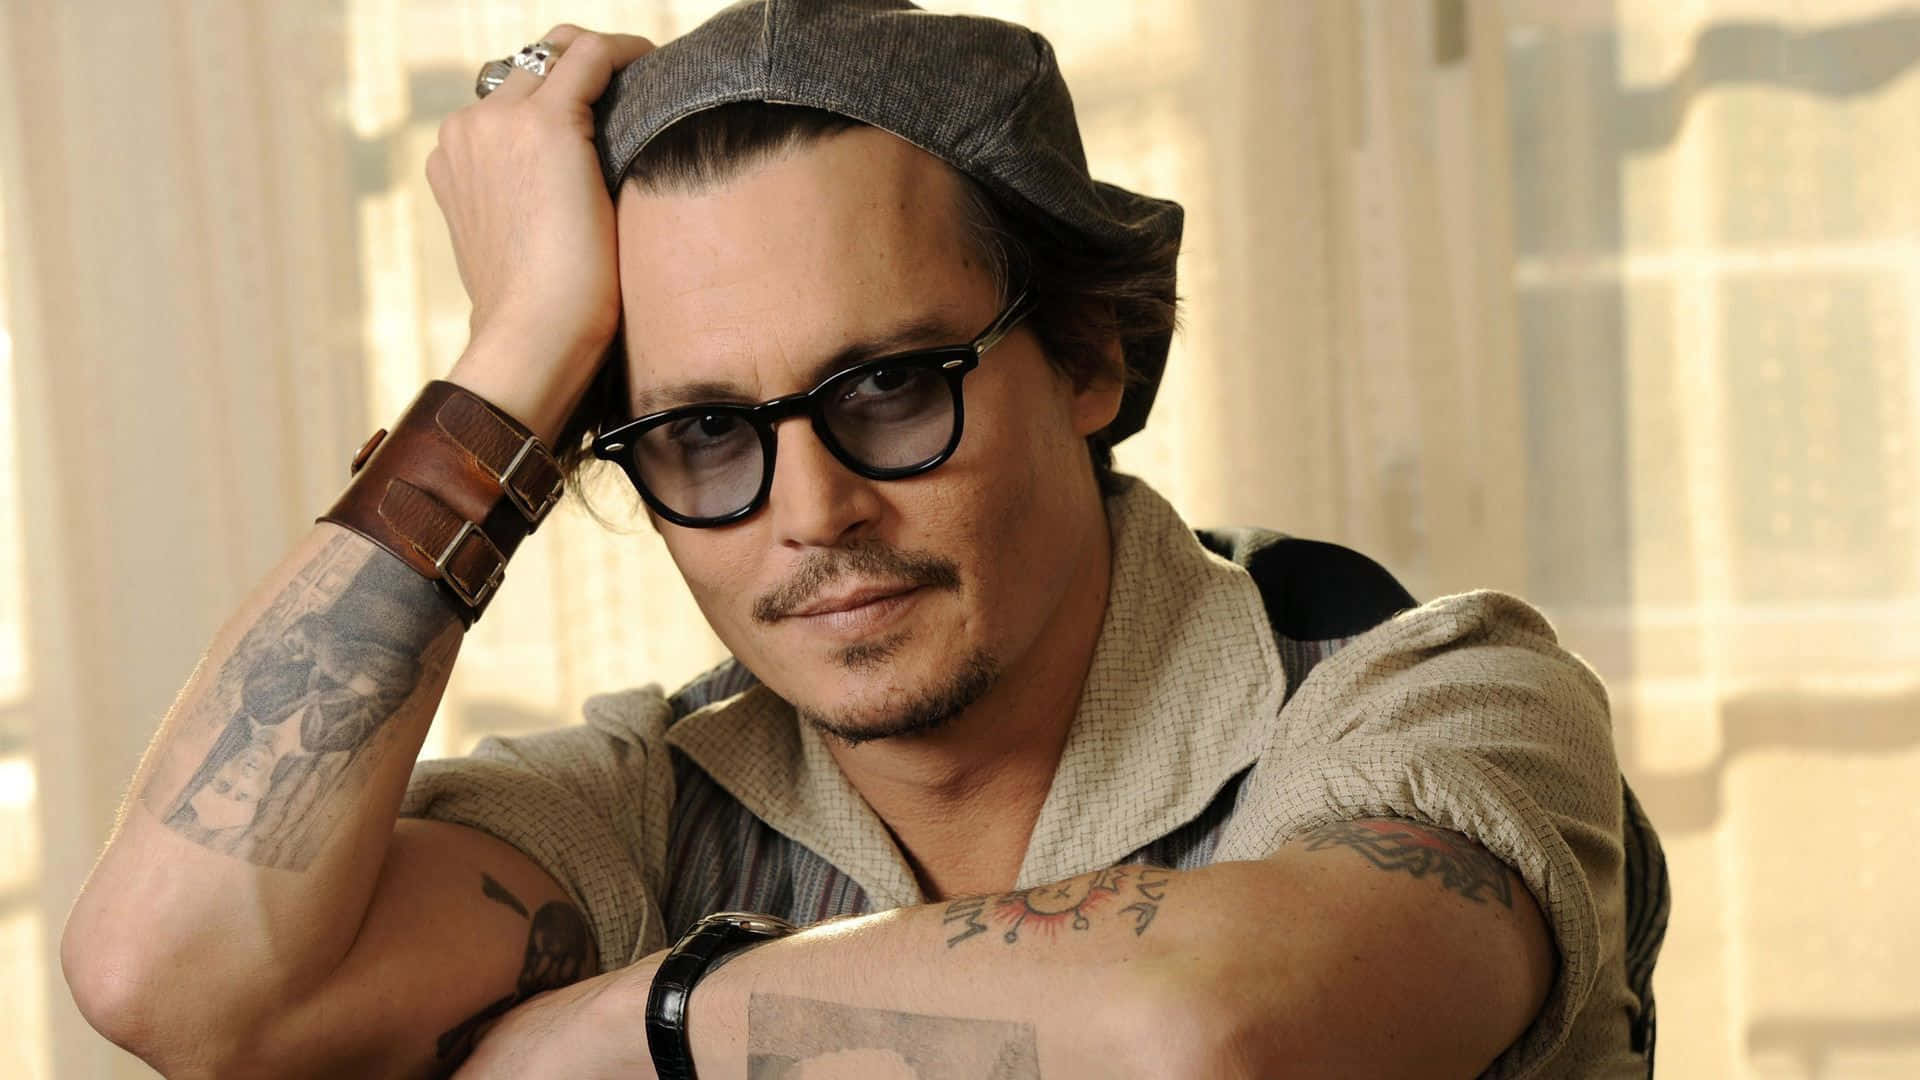 Johnny Depp looking suave.